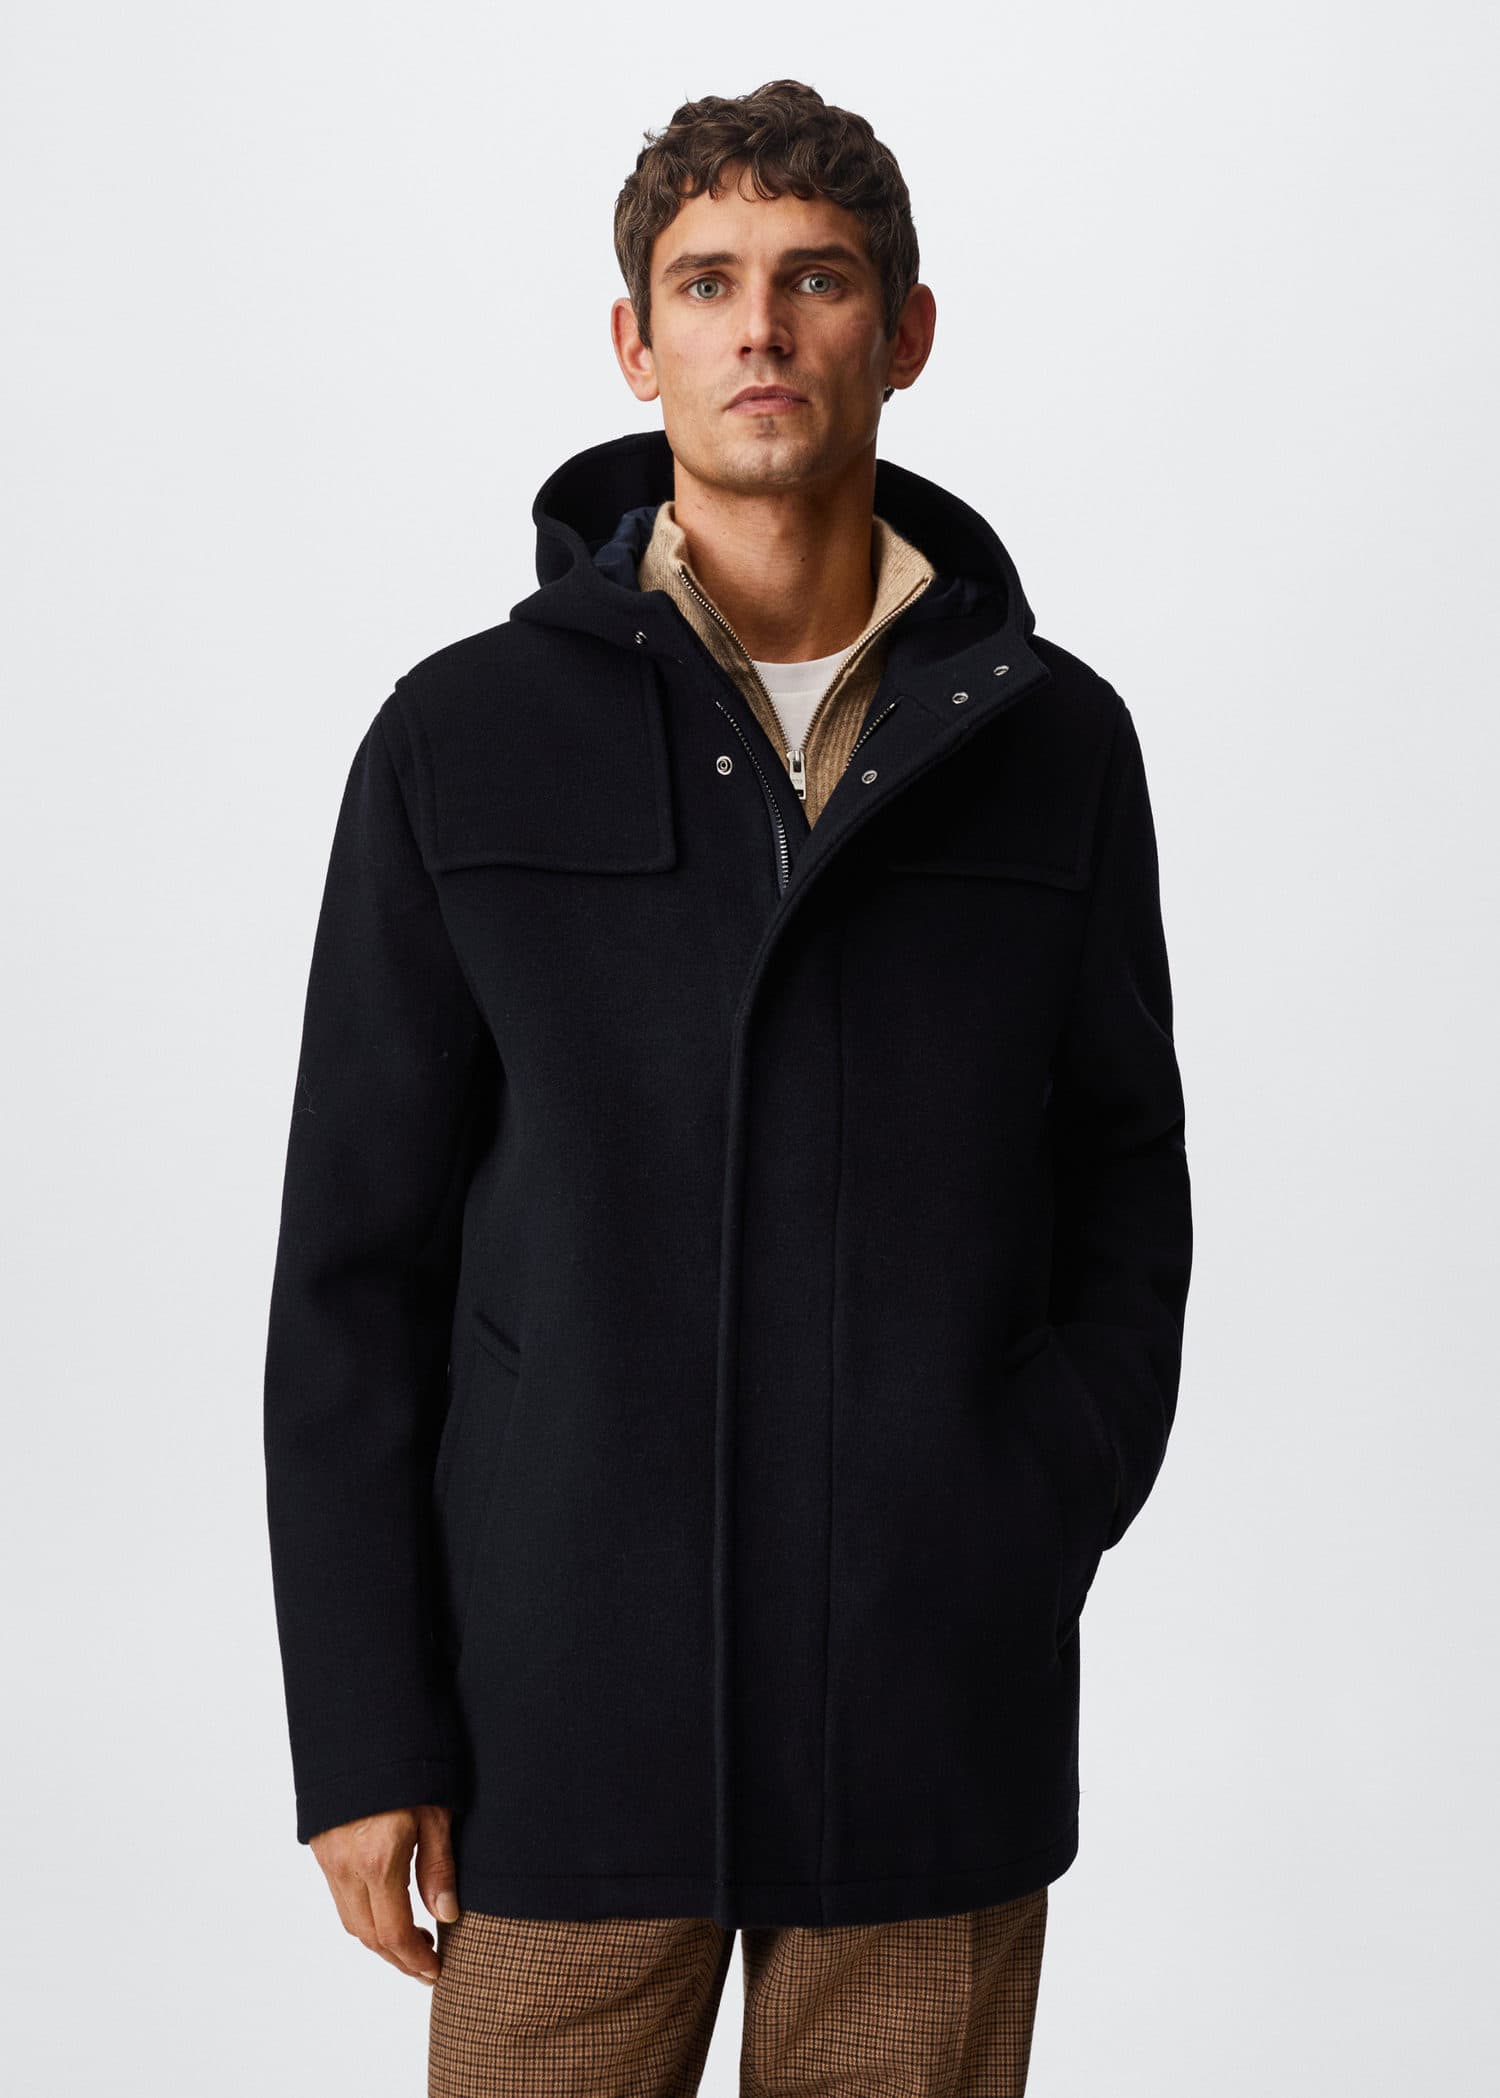 Hooded wool coat - Medium plane